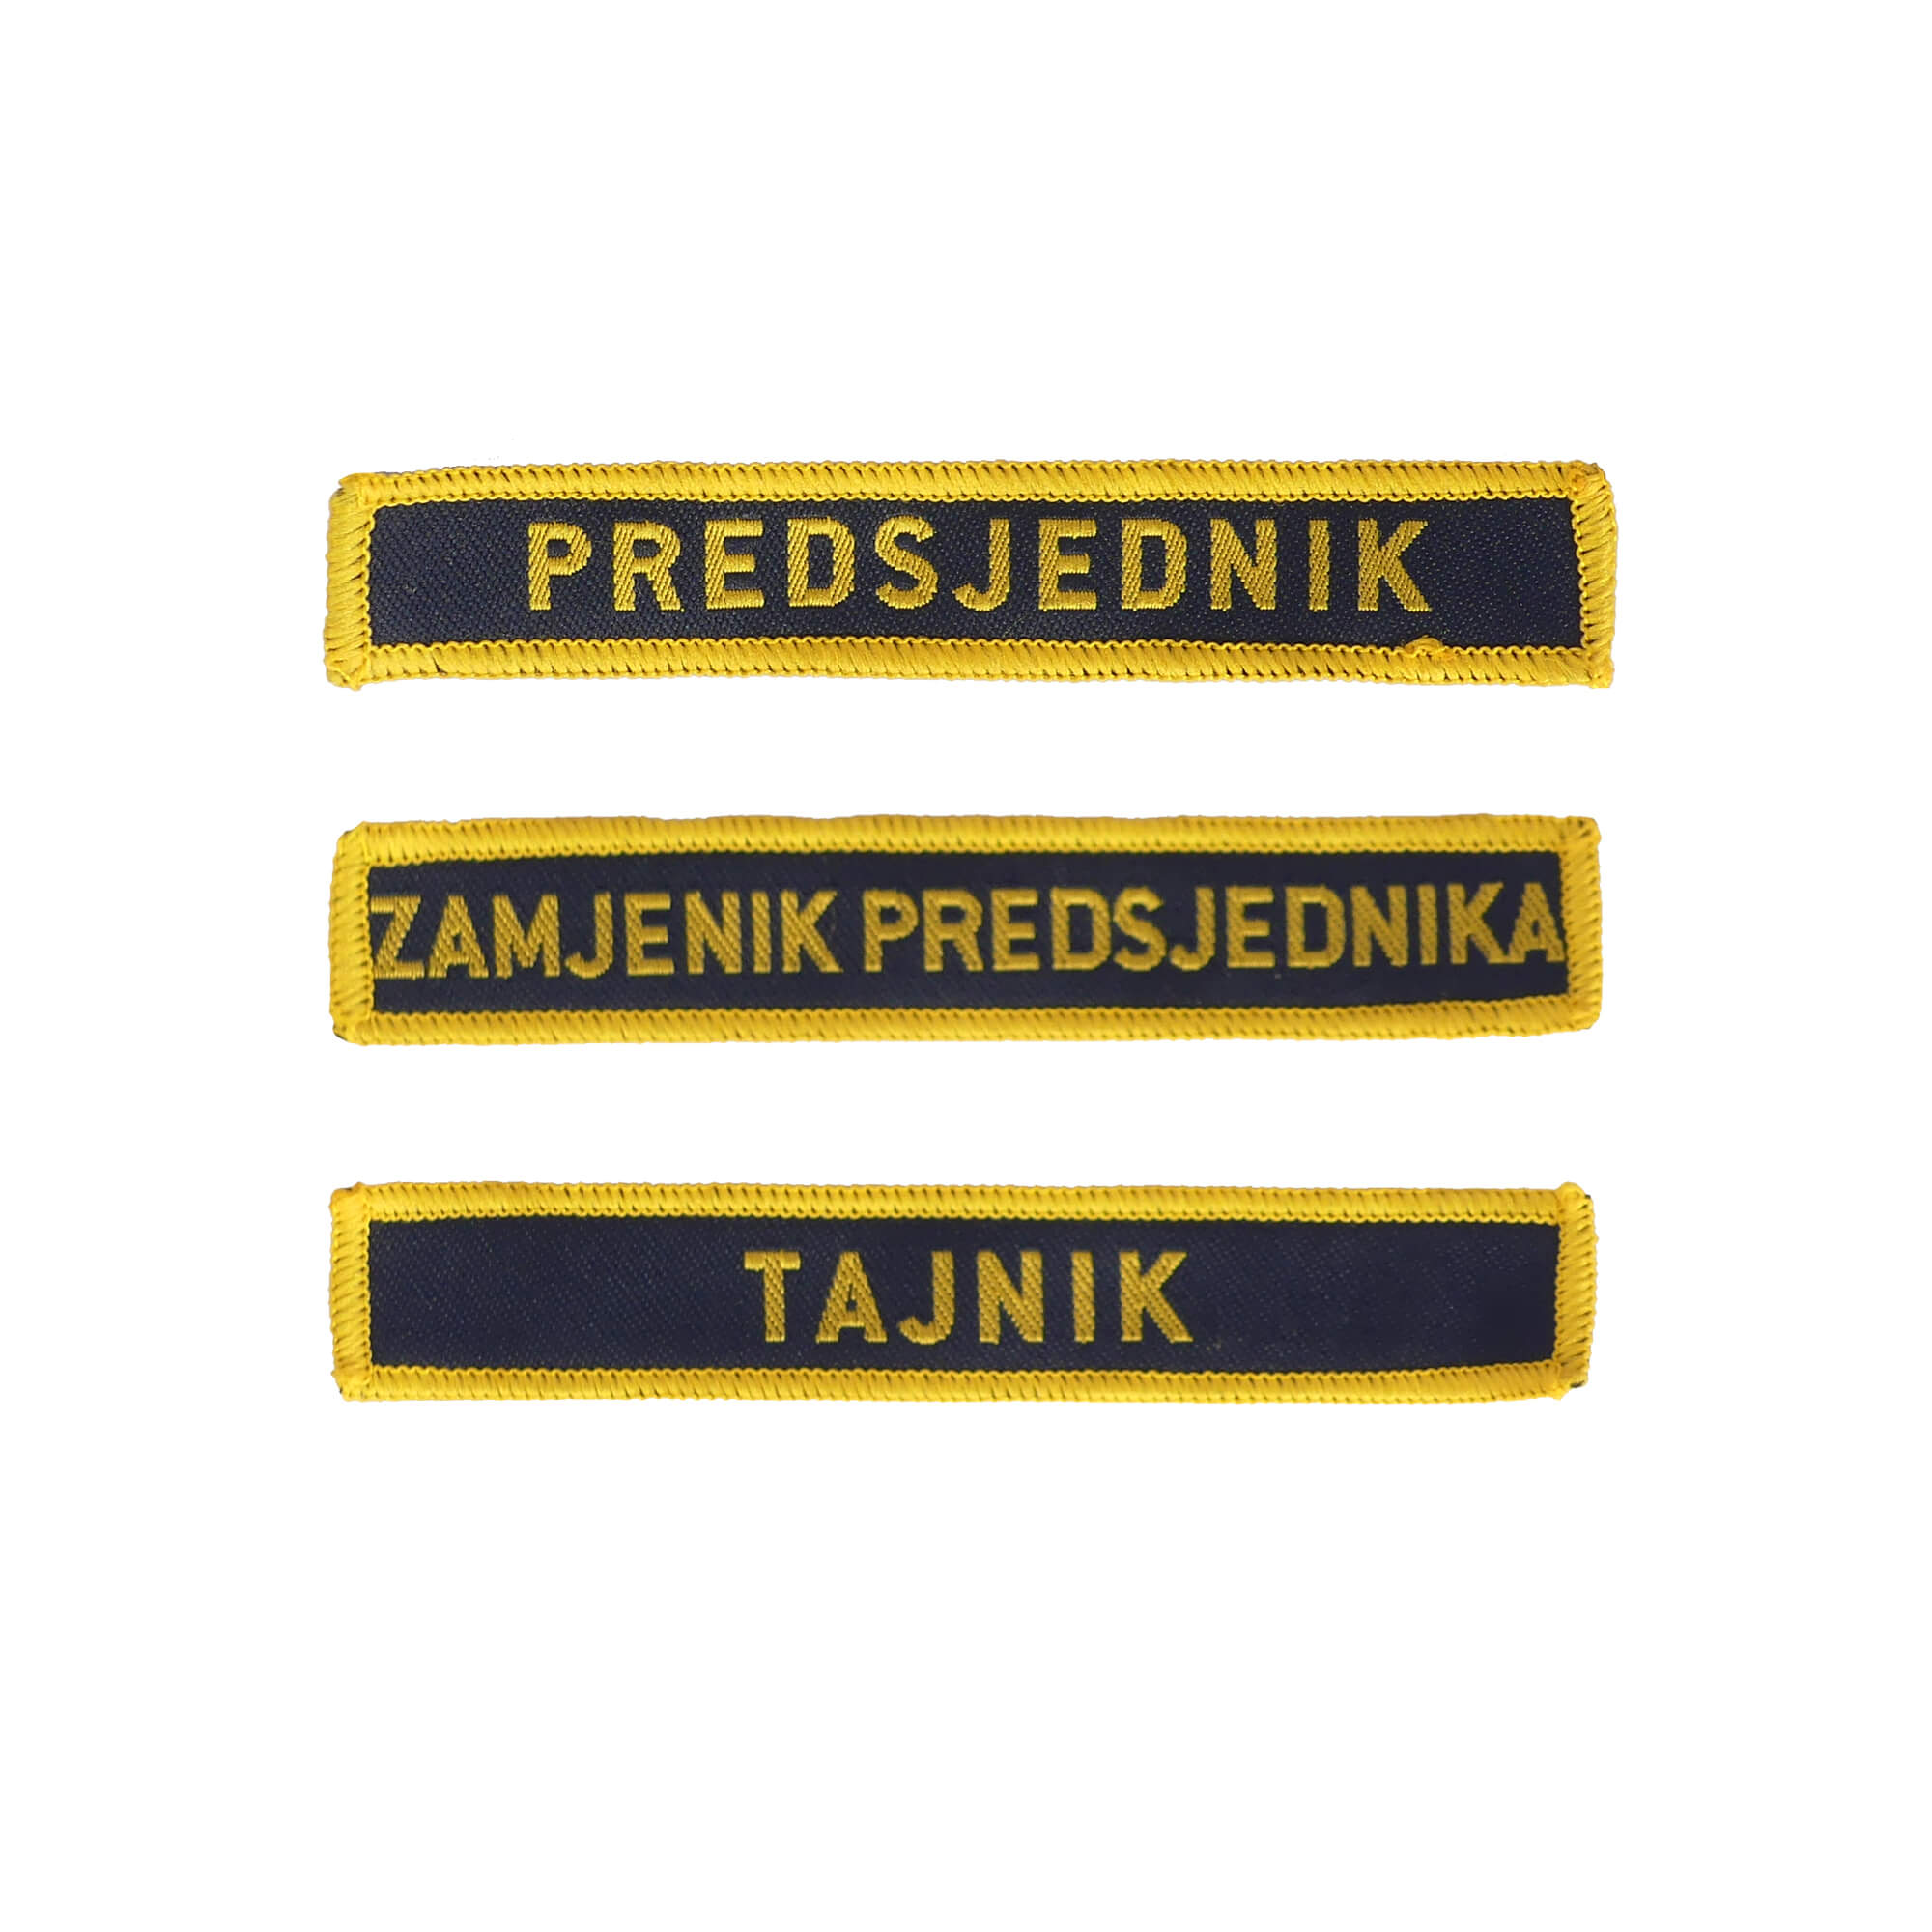 Last name / duty emblem